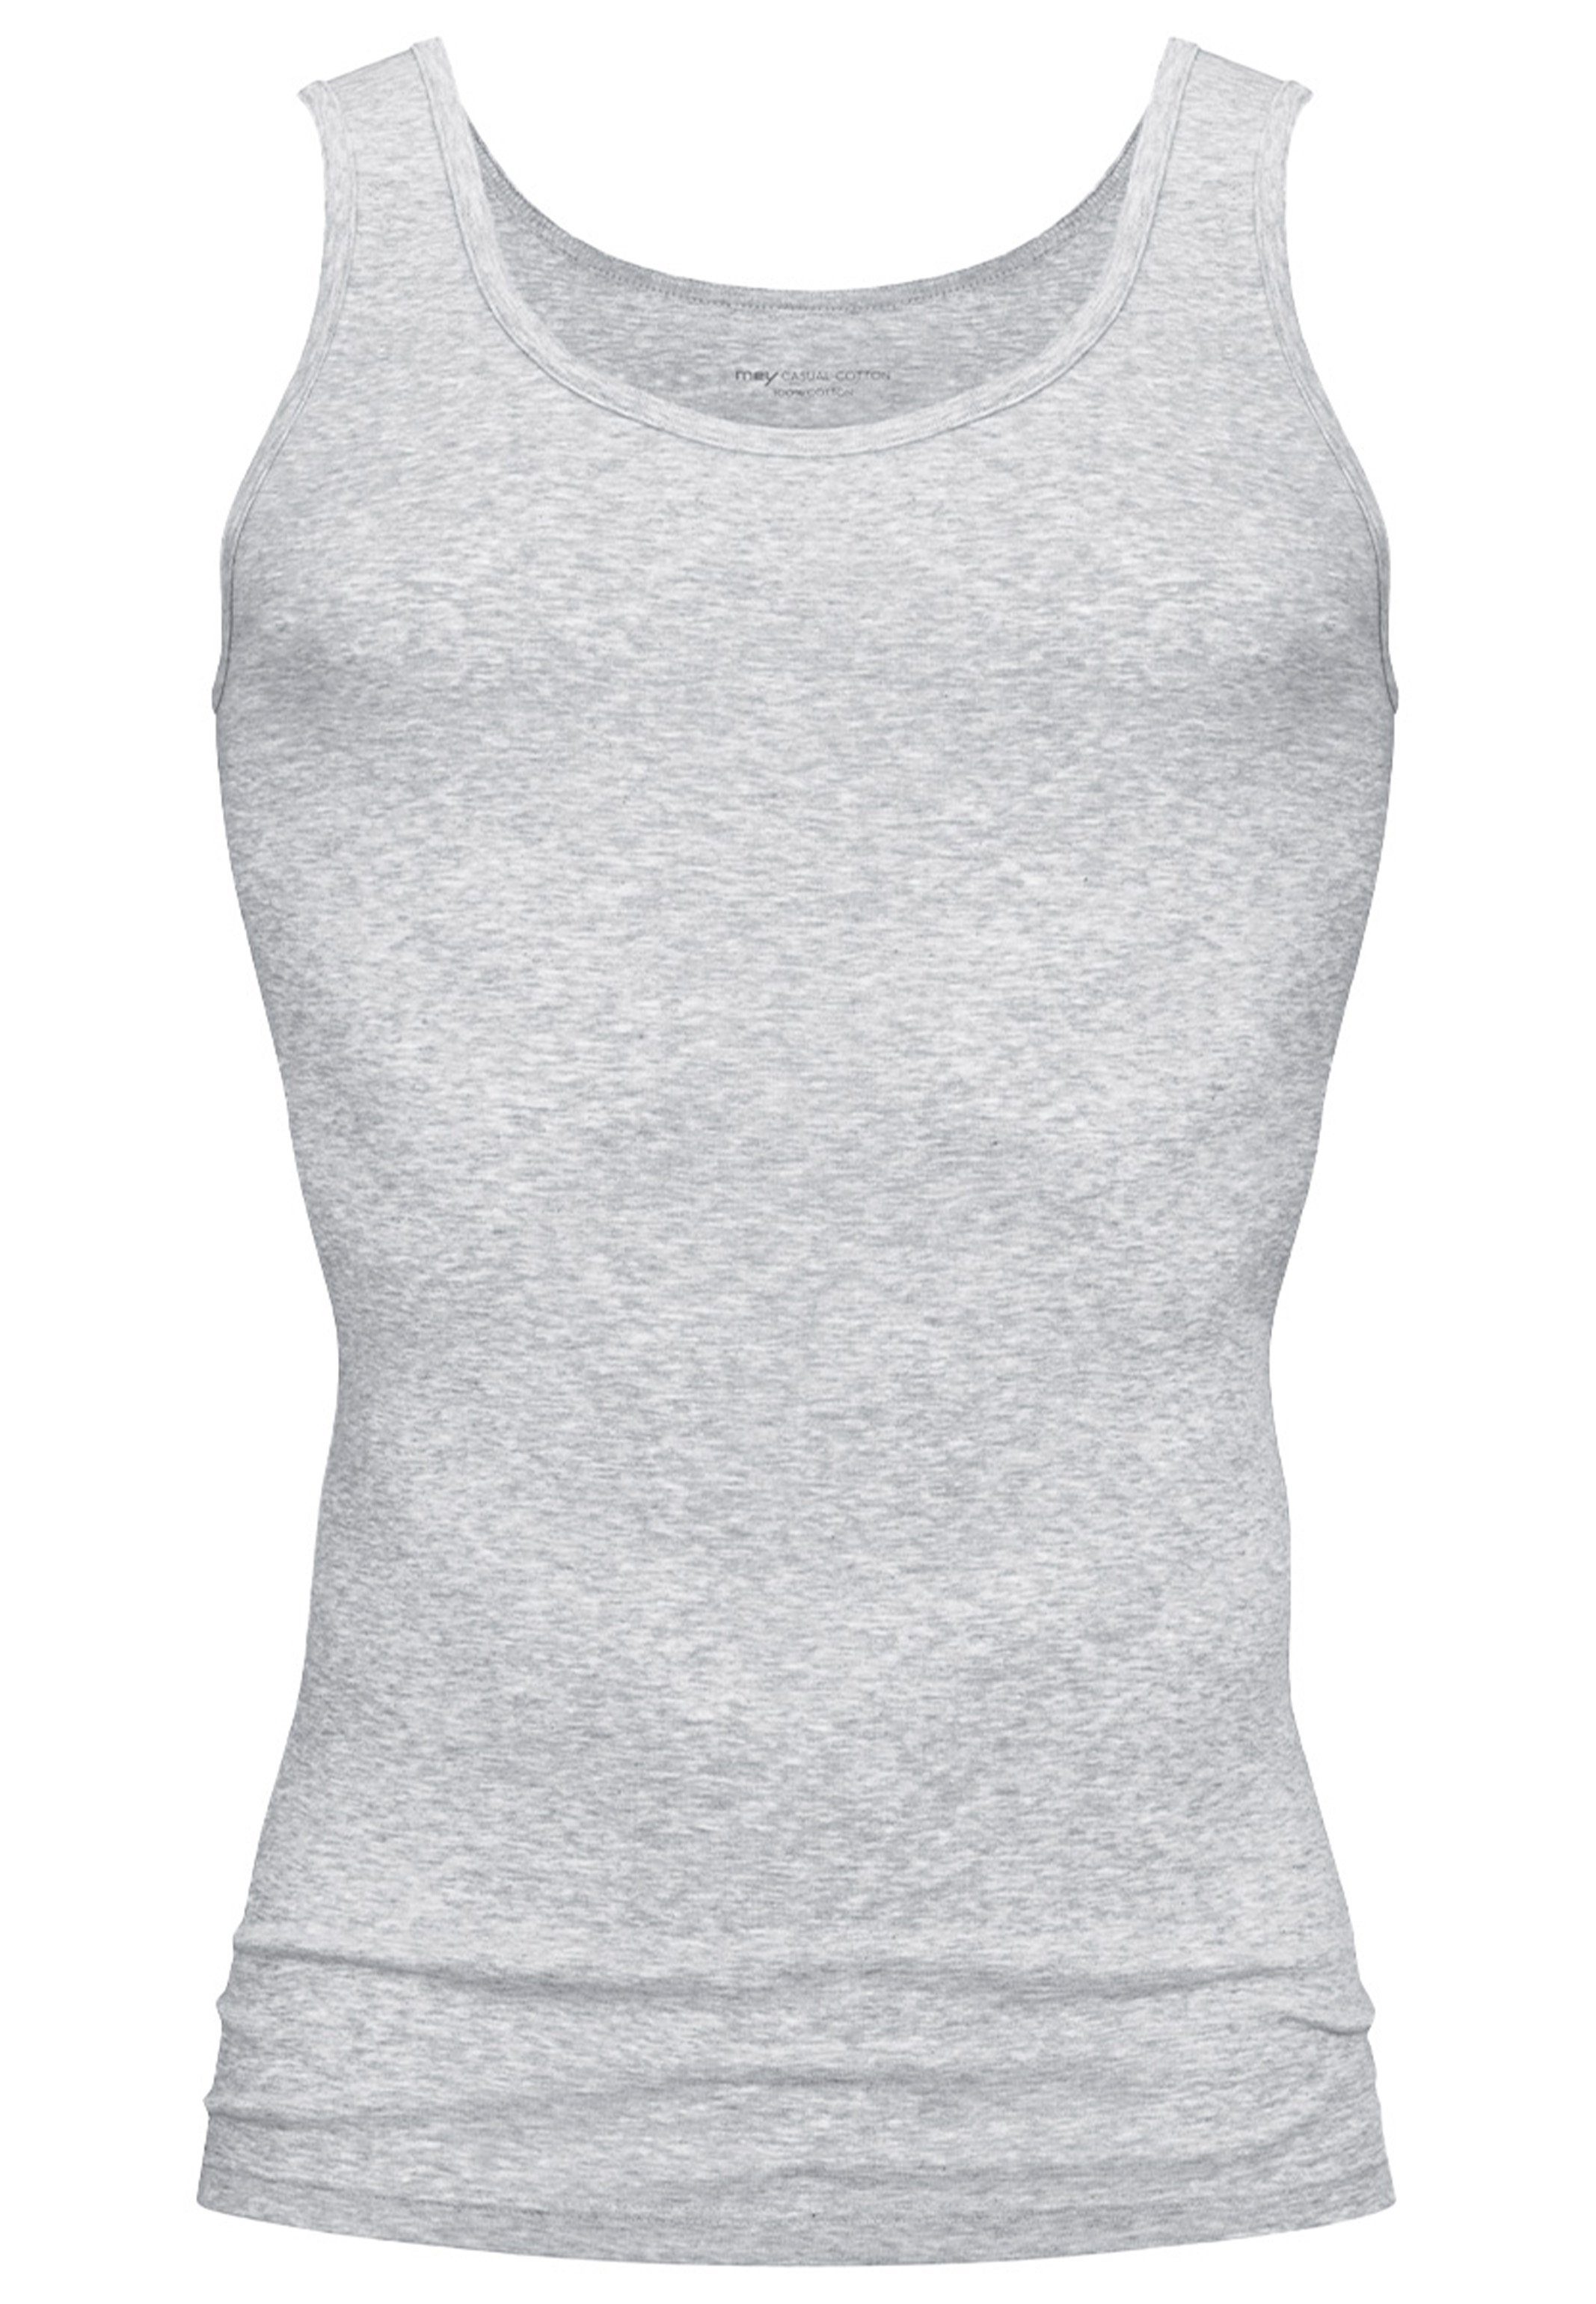 Mey Unterhemd Baumwolle Unterhemd / melange Light Cotton Casual grey - Tanktop - (1-St)